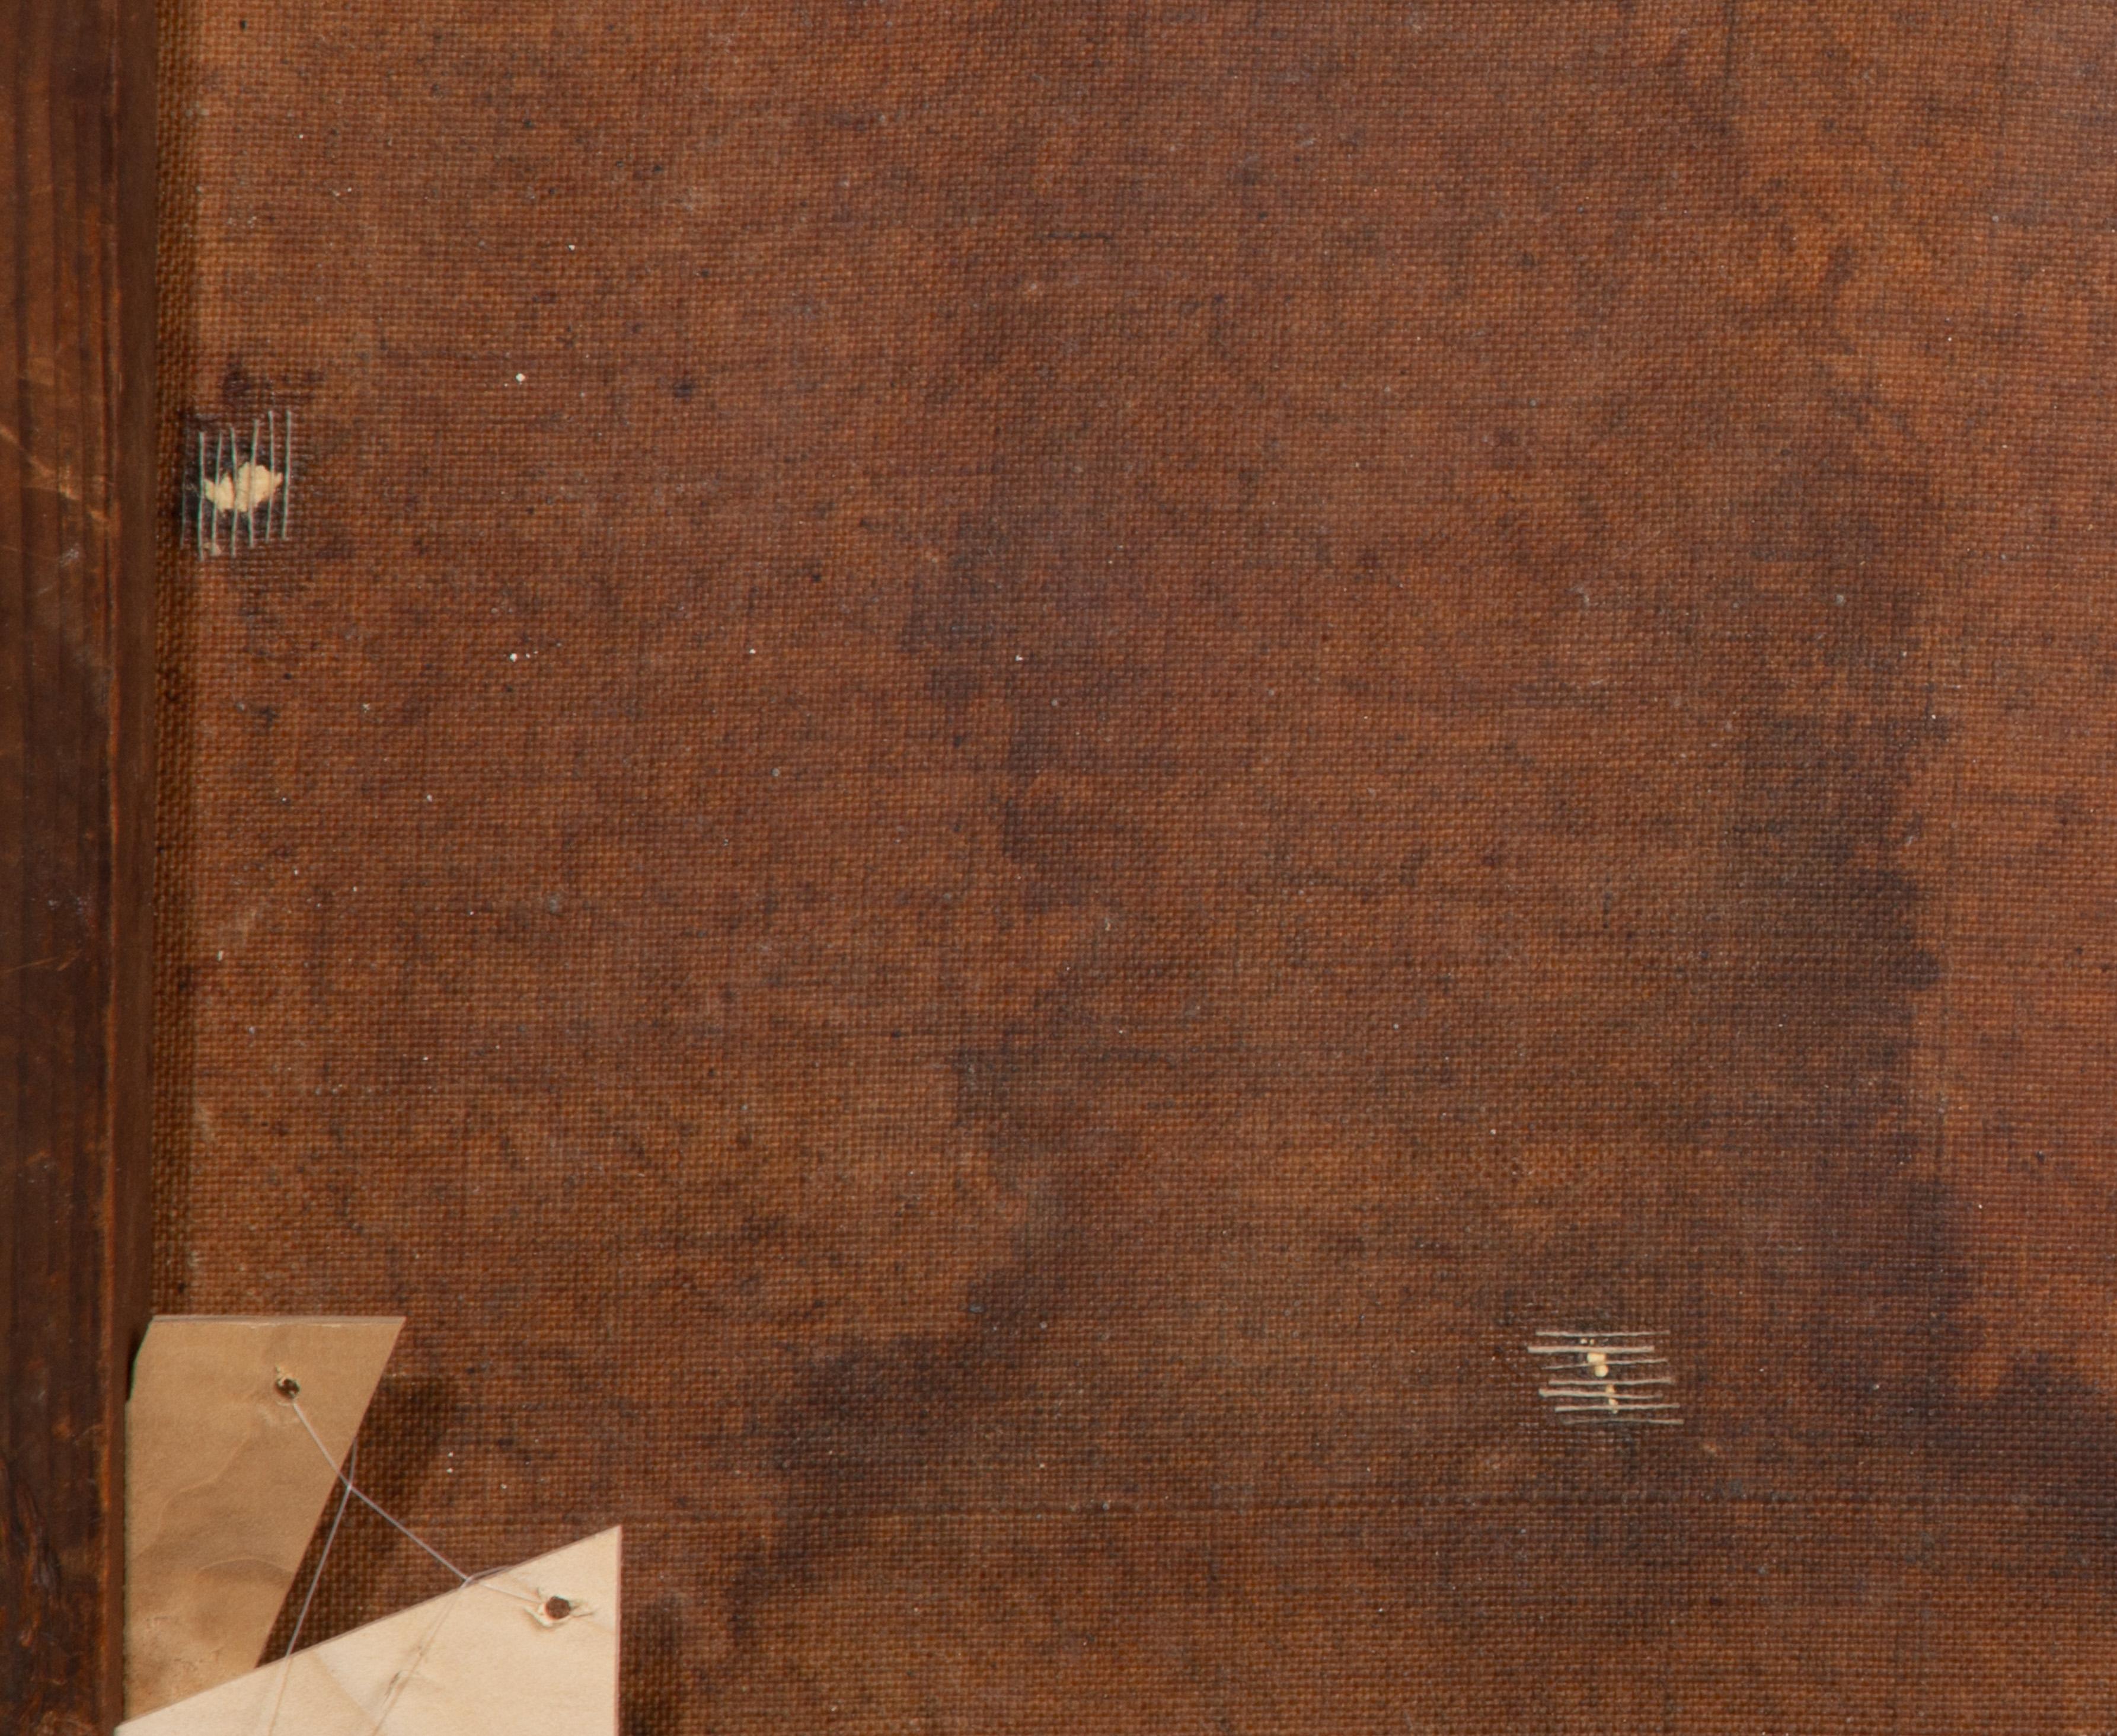 American School (19th Century) 'View on the Susquehana' Oil on Canvas